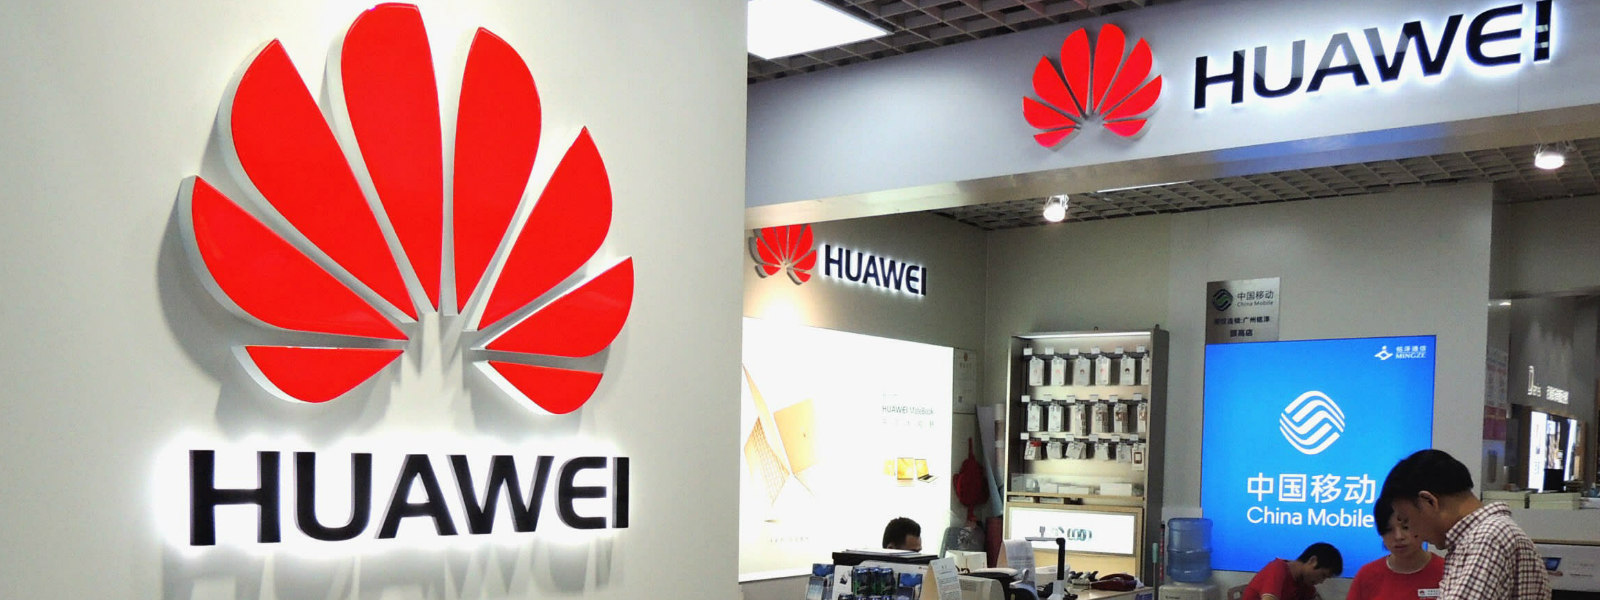 China calls on U.S. senators to cease “suppression” of Huawei